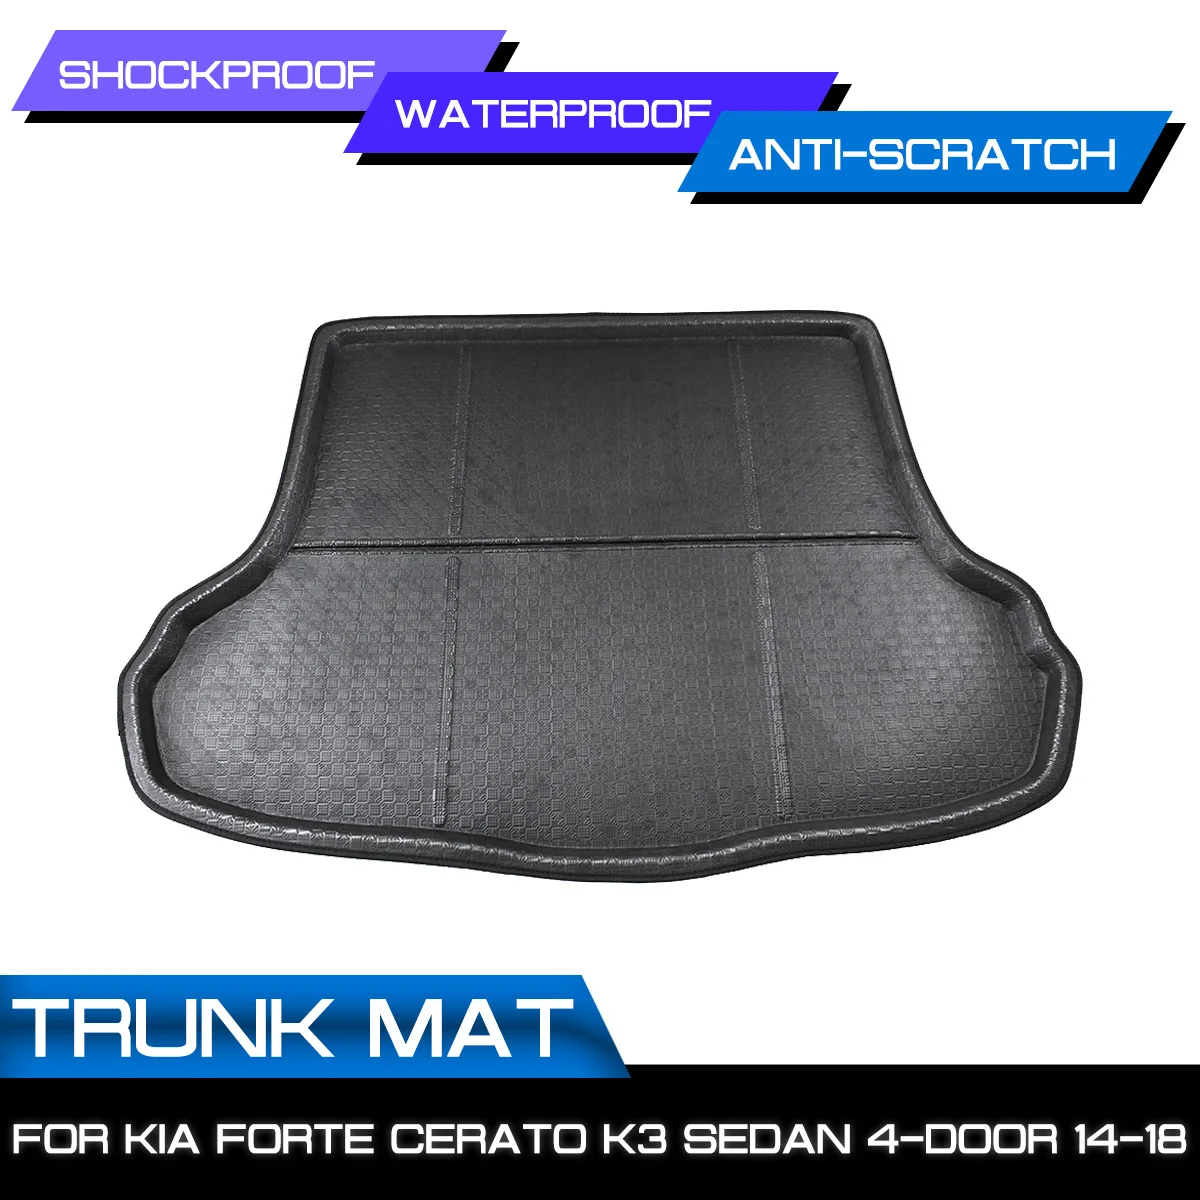 

Car Rear Trunk Boot Mat Waterproof Floor Mats Carpet Anti Mud Tray Cargo Liner For Kia Forte Cerato K3 Sedan 4-door 2014-2018